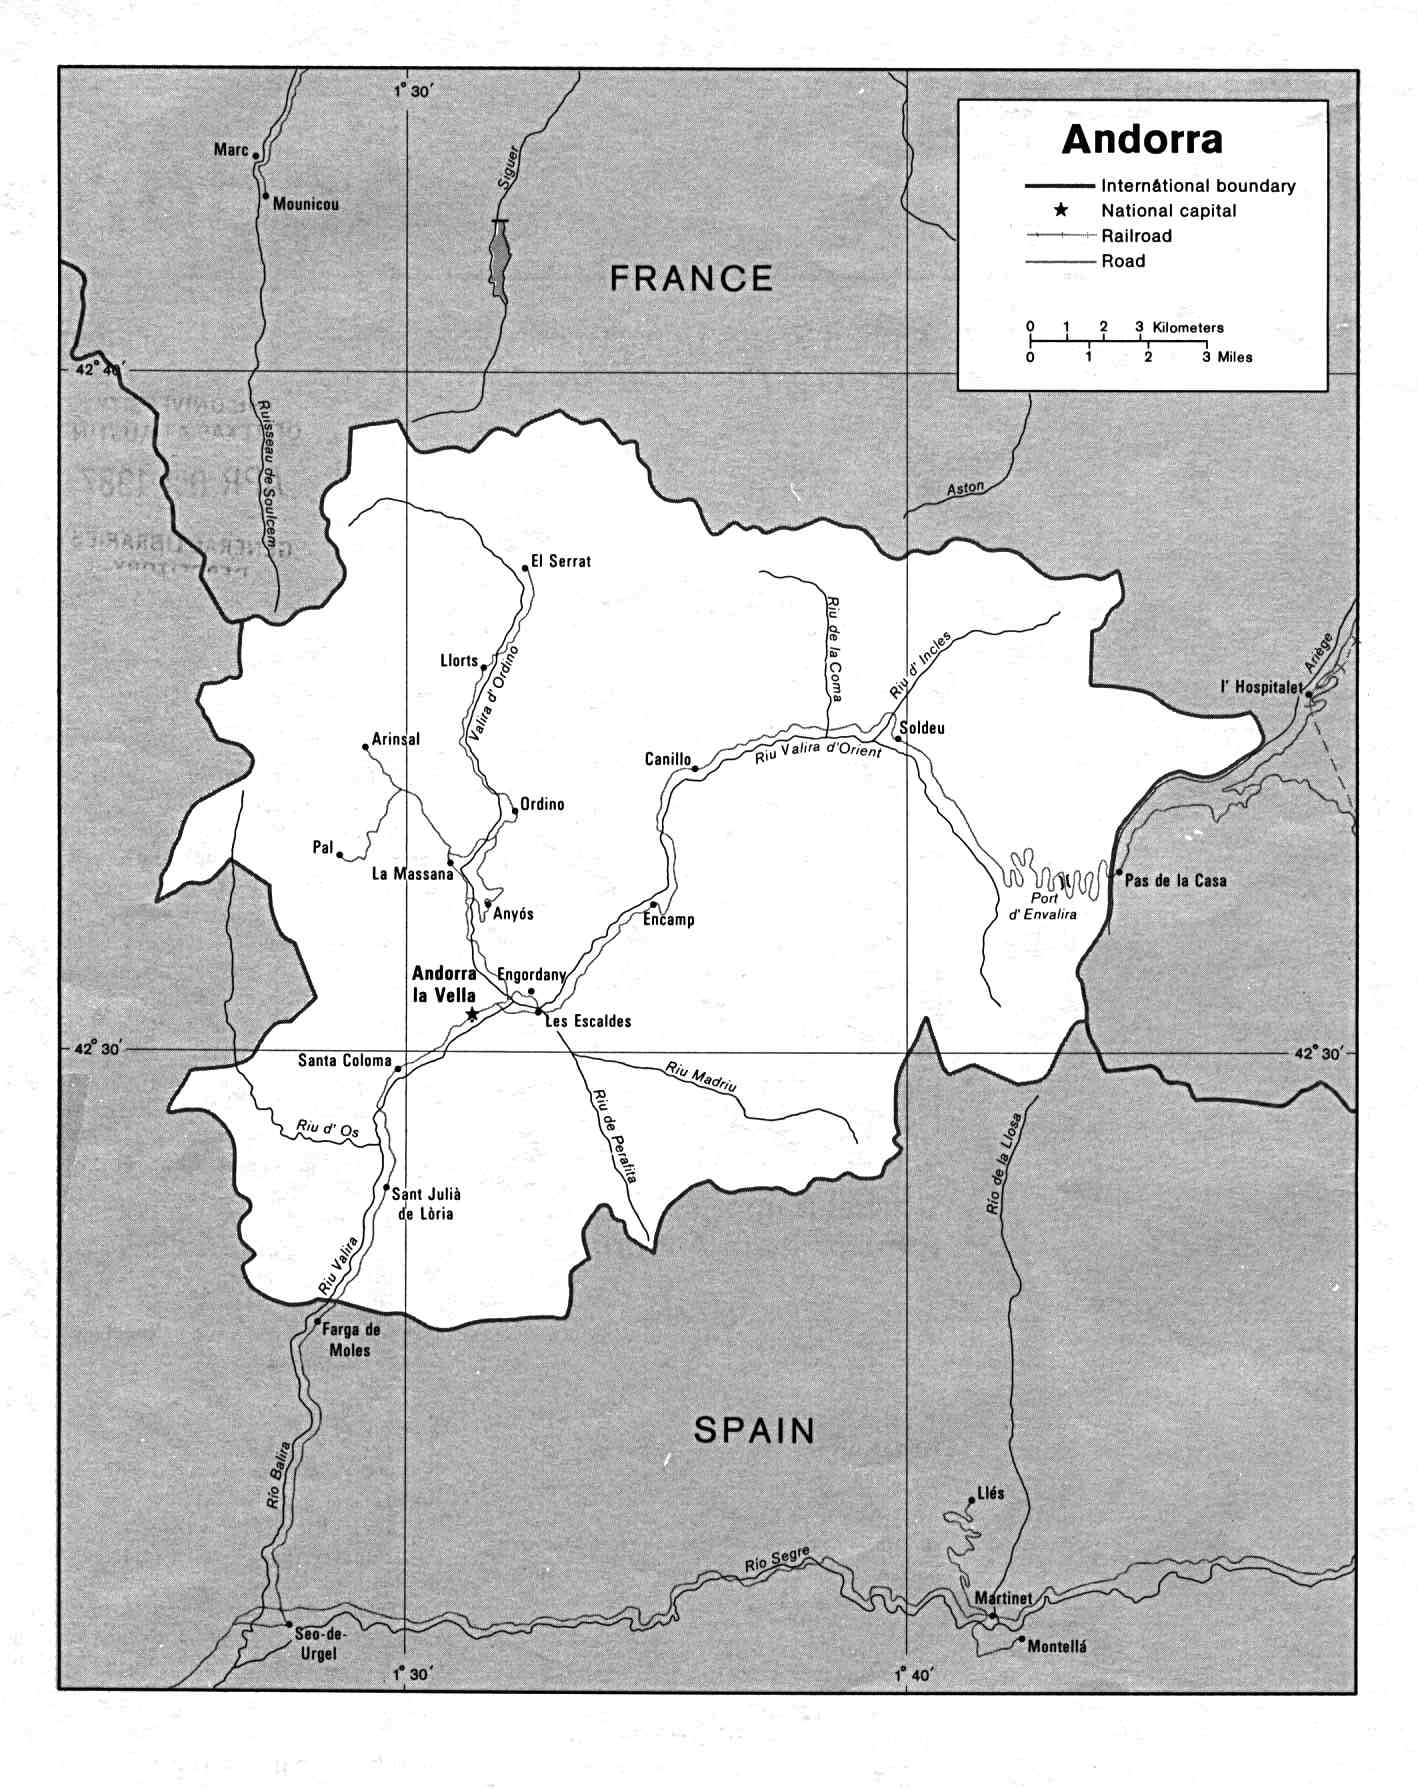 political map of andorra 1986